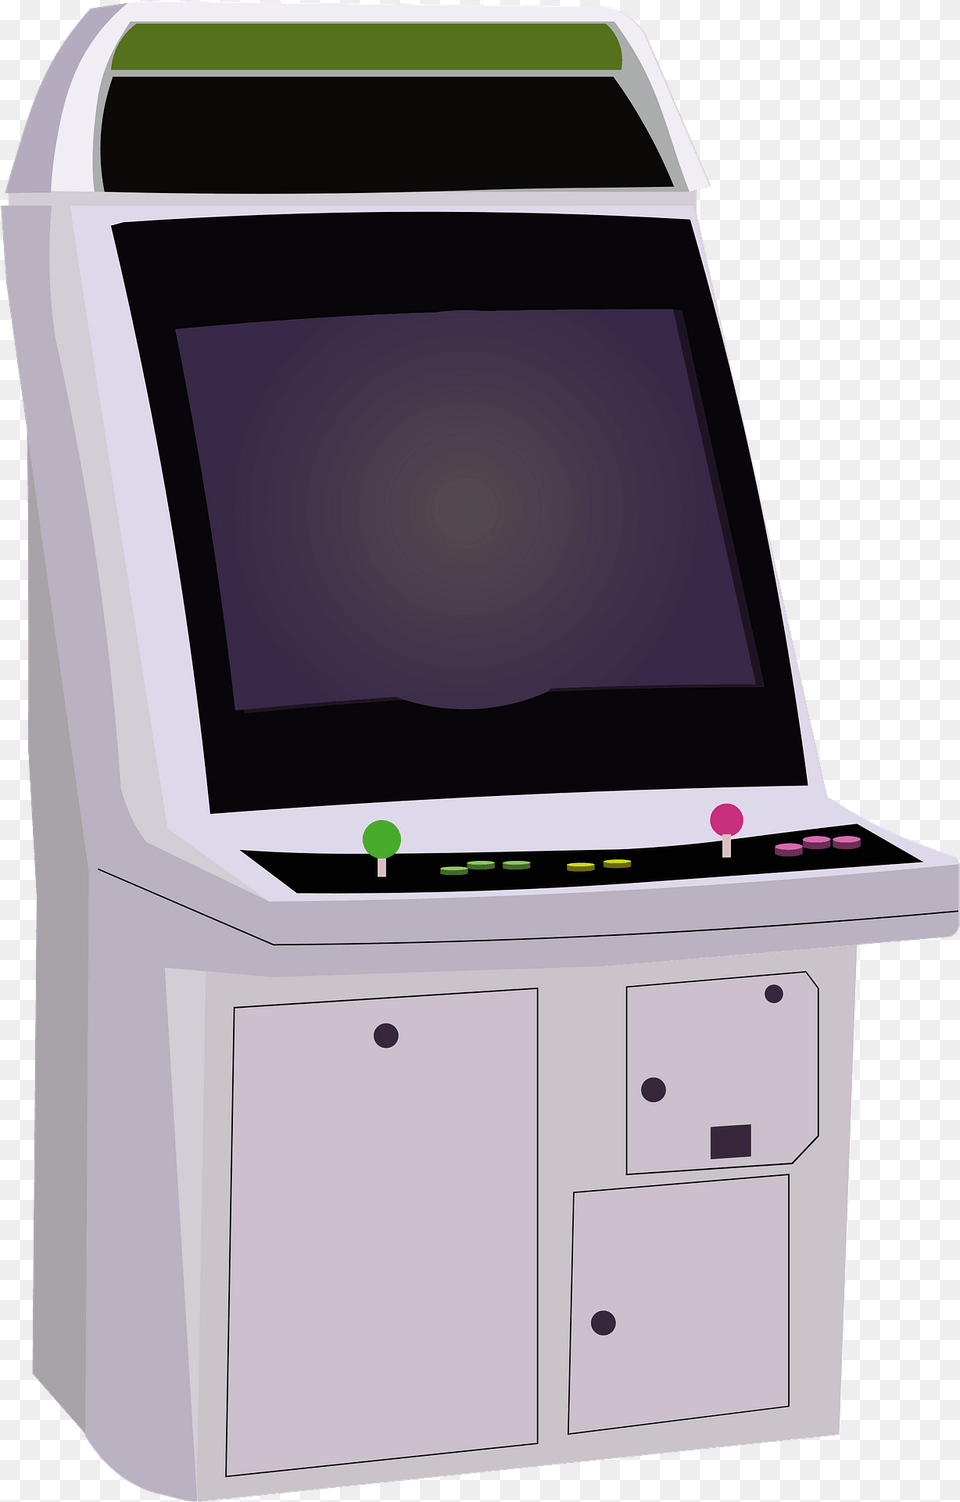 Arcade Game Clipart Video Game Arcade, Arcade Game Machine Free Transparent Png